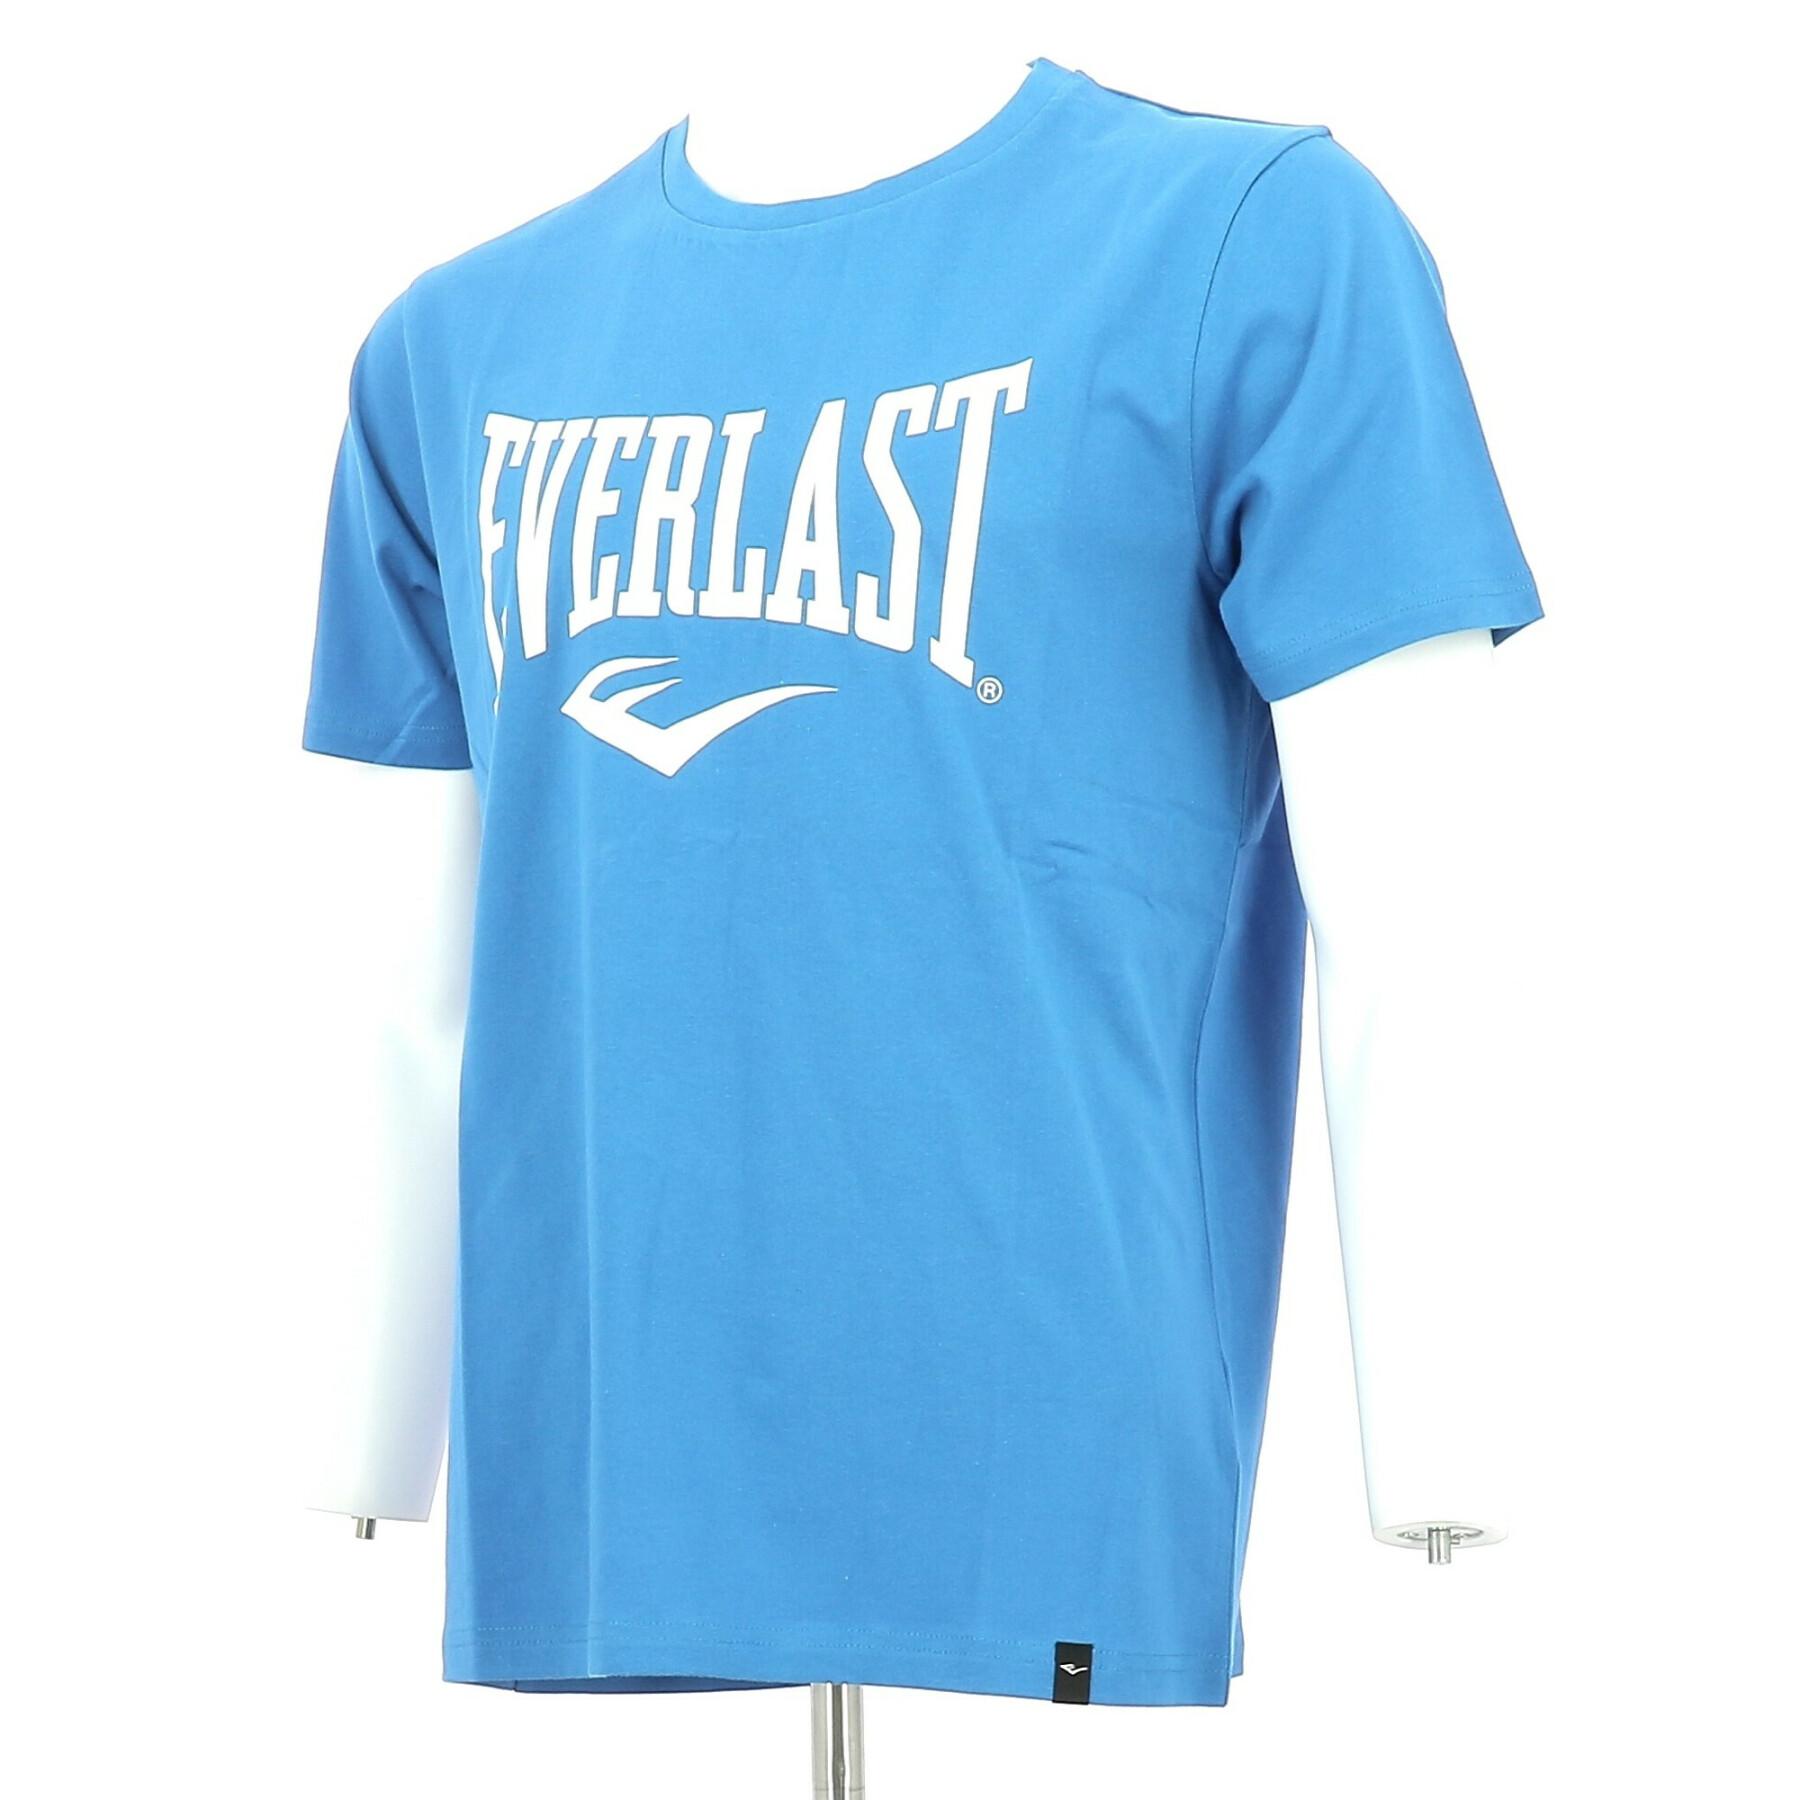 Basic T-shirt Everlast Russel